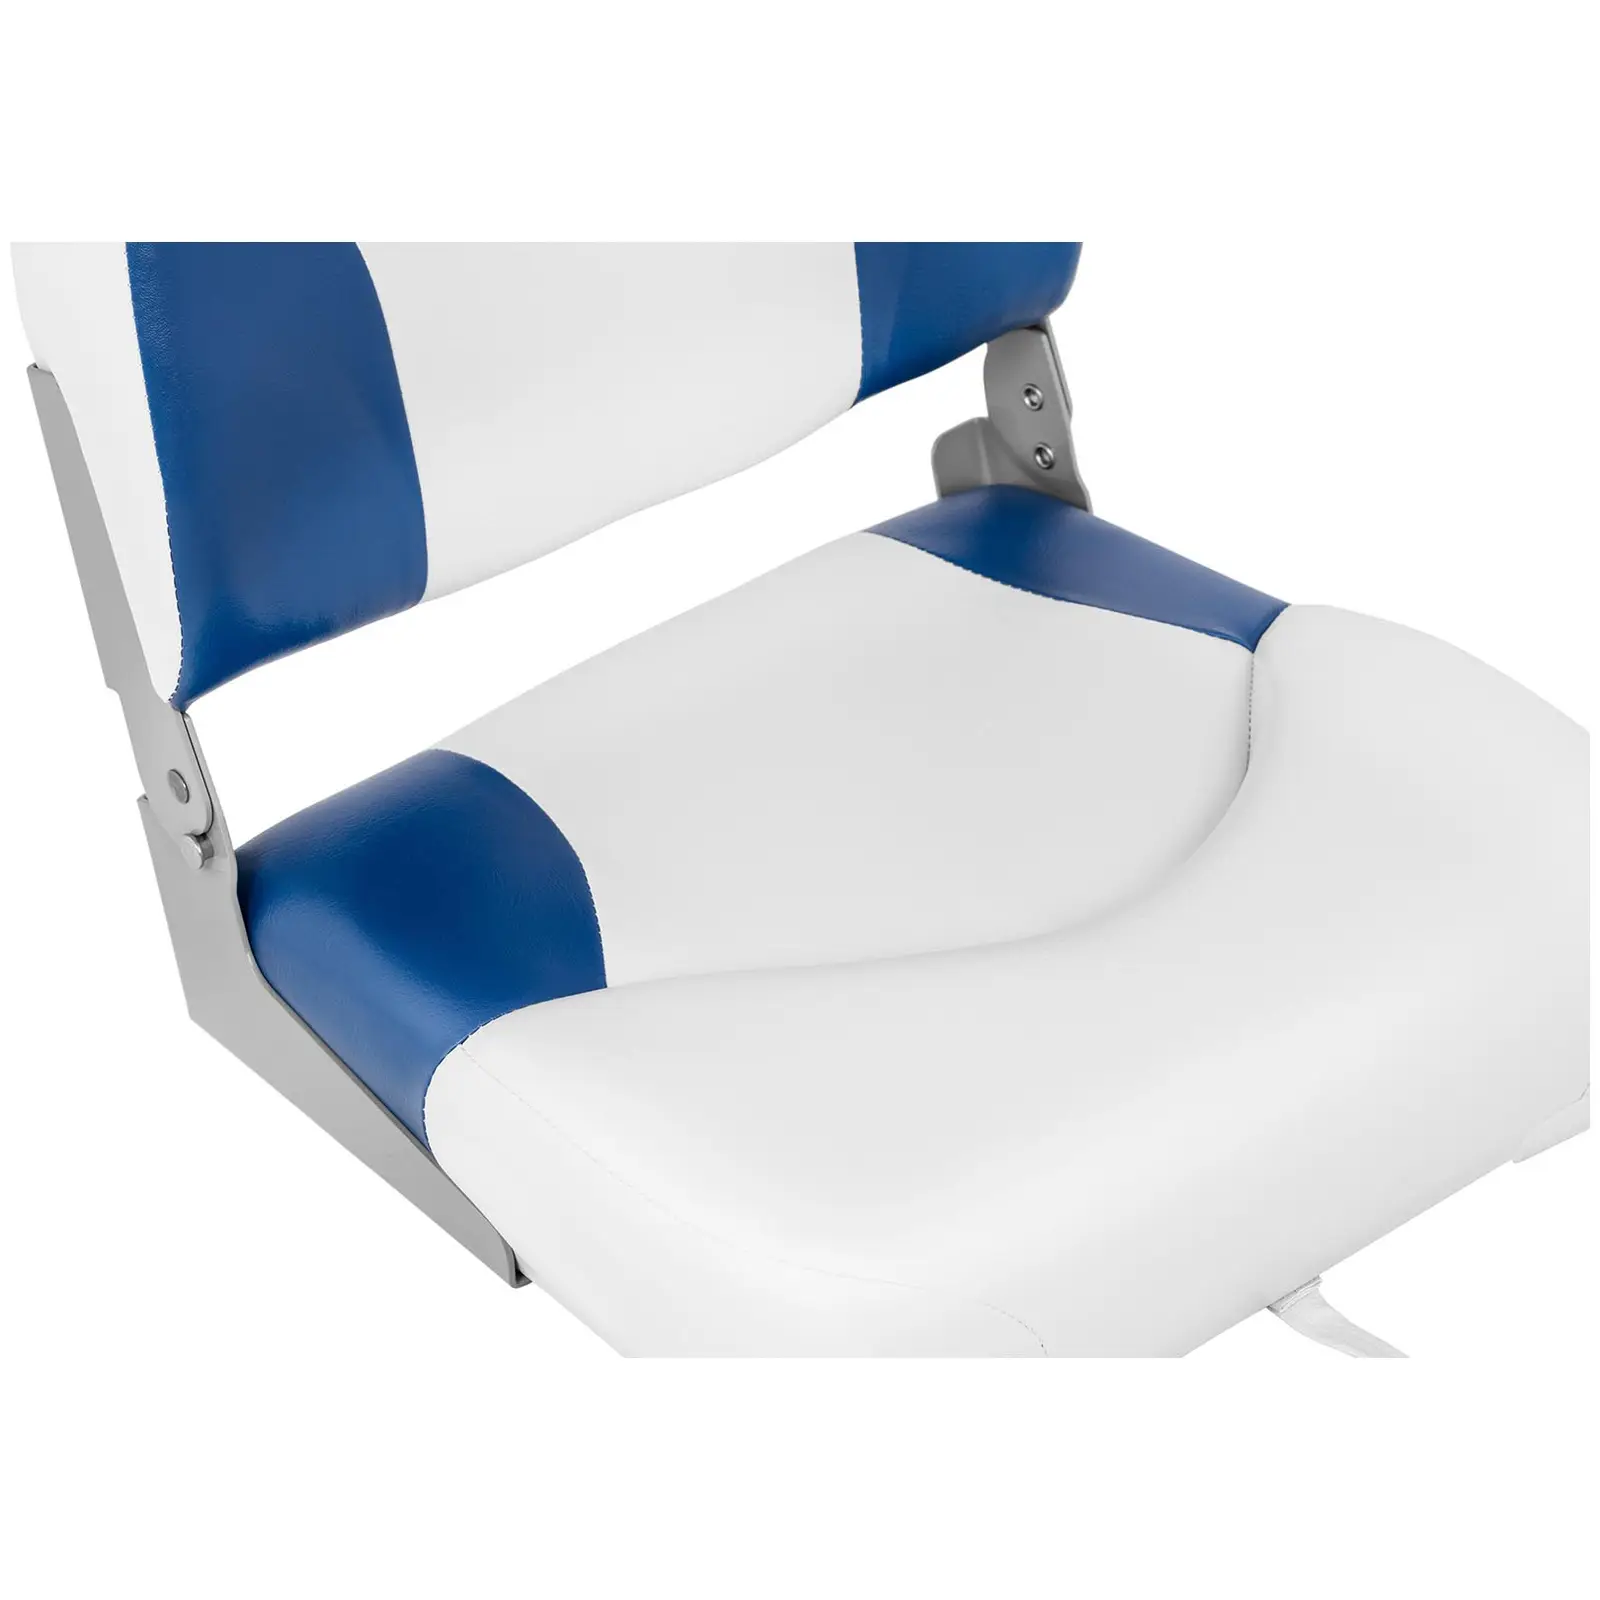 Sedile barca - 40x40x50 cm - Bianco-blu